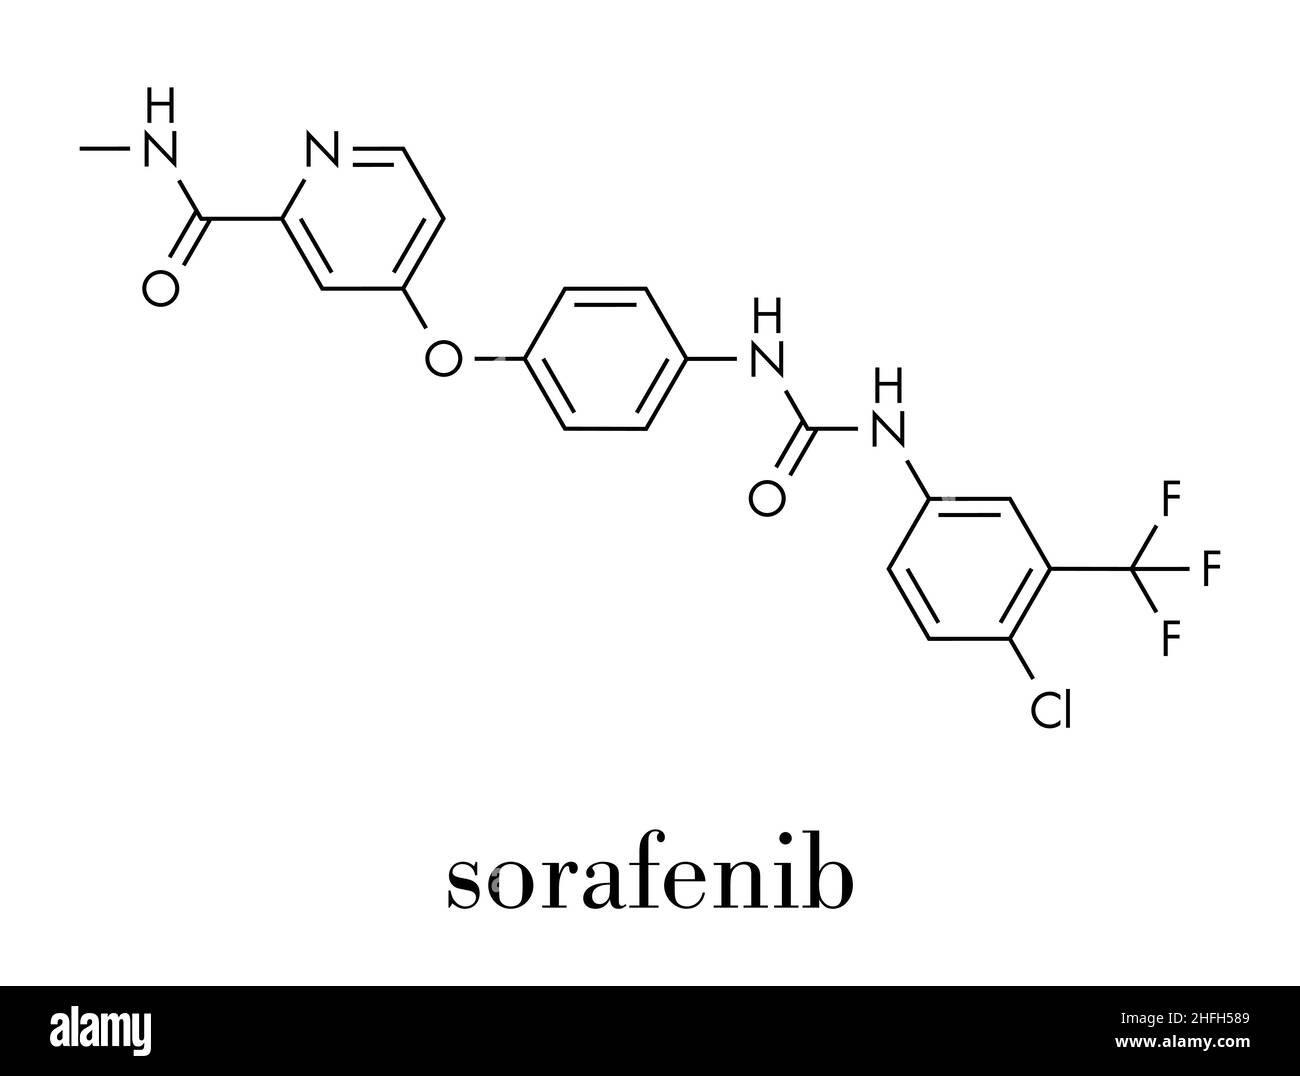 Sorafenib cancer drug molecule. Tyrosine kinase inhibitor (TKI). Skeletal formula. Stock Vector